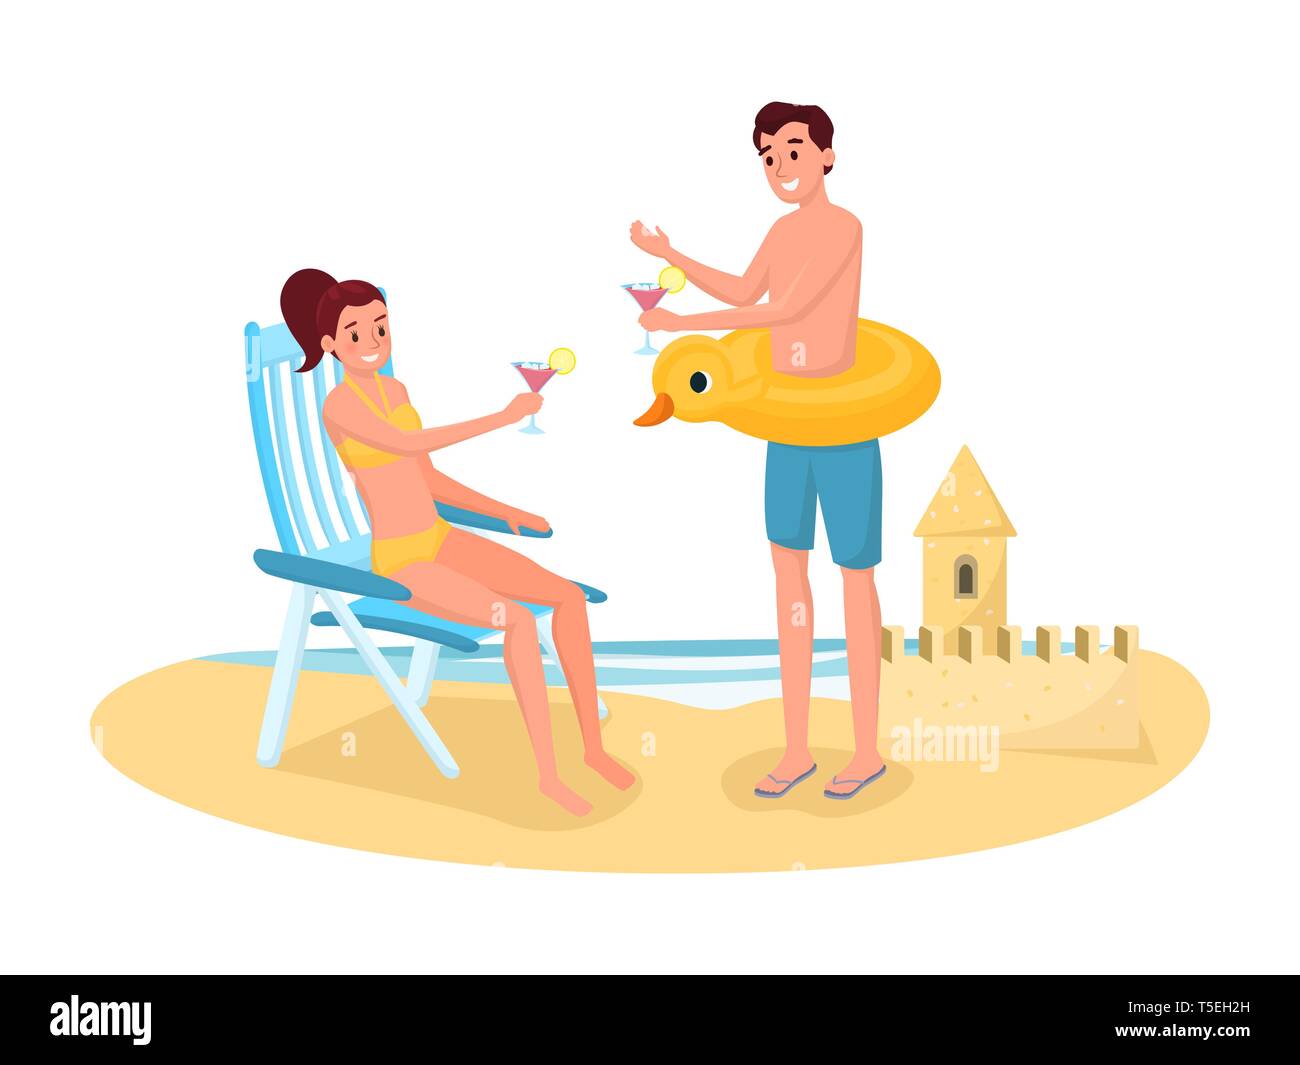 Summer season outdoor activities vector illustration. Man and woman on honeymoon, holiday vacation isolated clipart. Cartoon couple drinking cocktails, sunbathing on beach design element Stock Vector